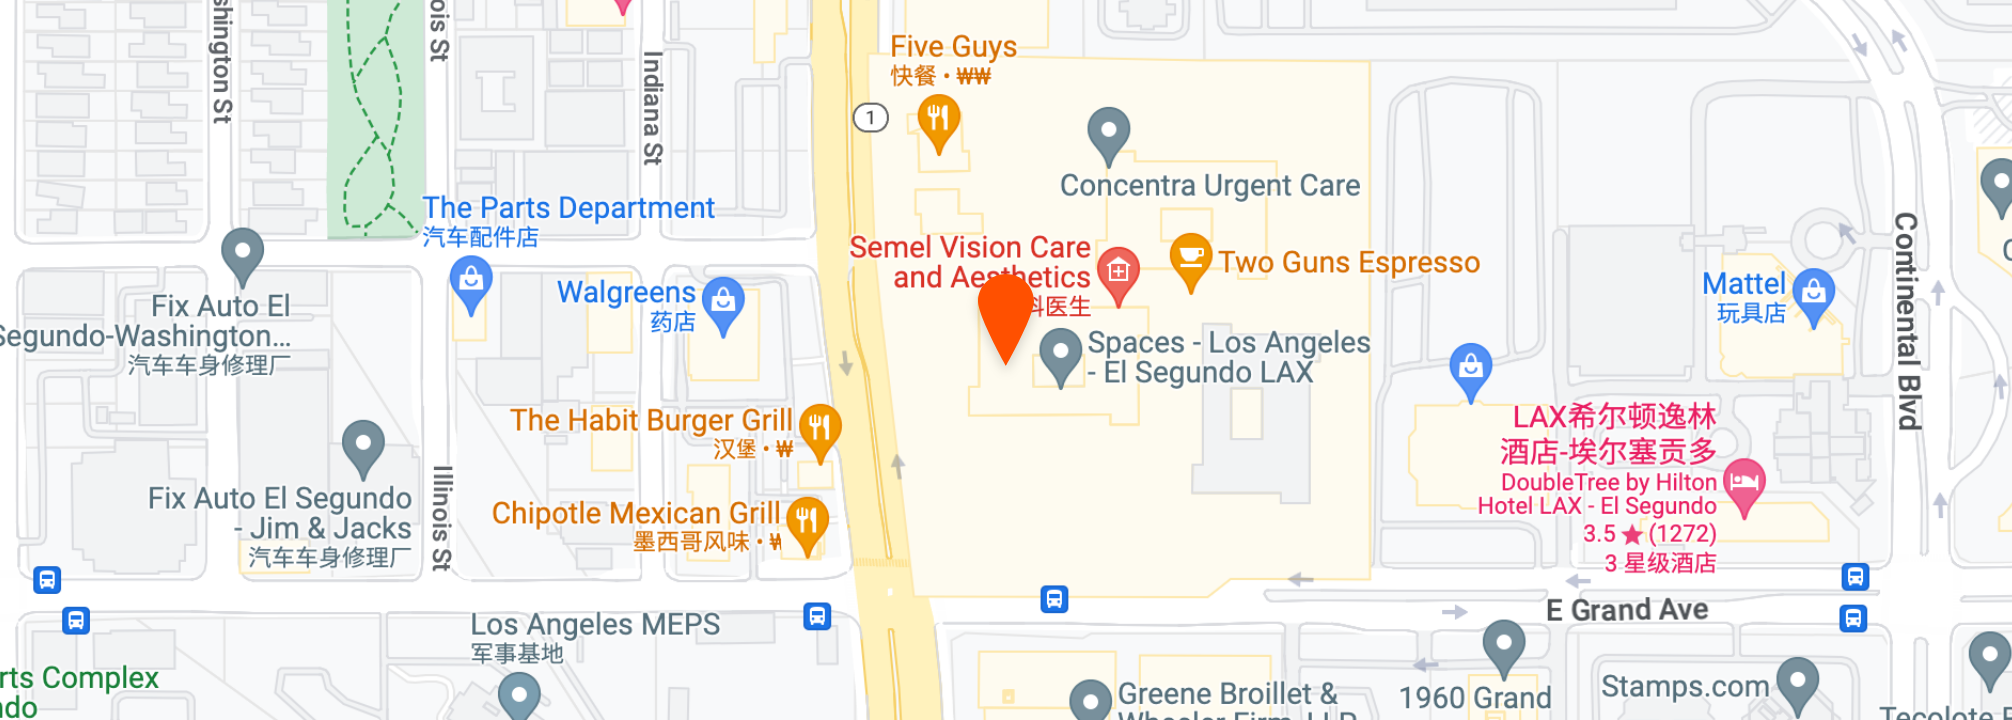 smilegate HQ location image